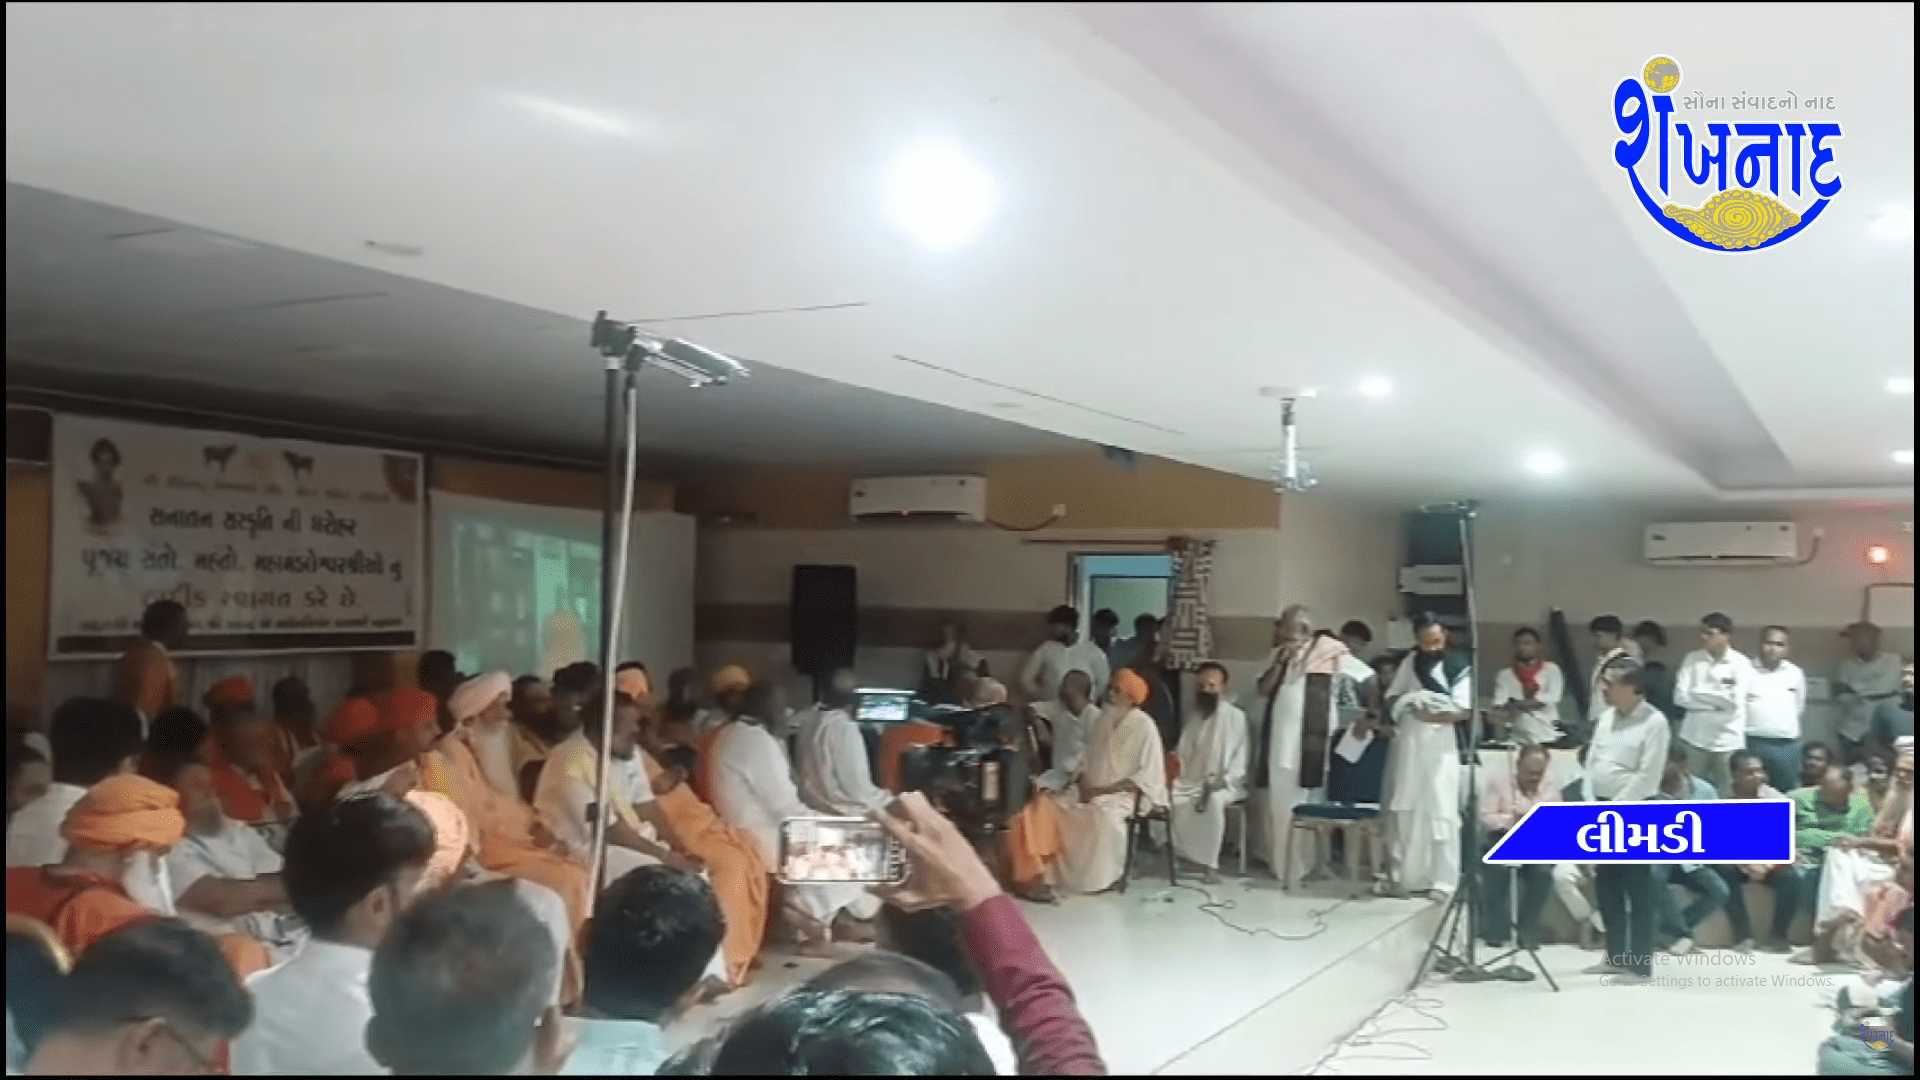 A saint convention was held at Limdi in Surendranagar